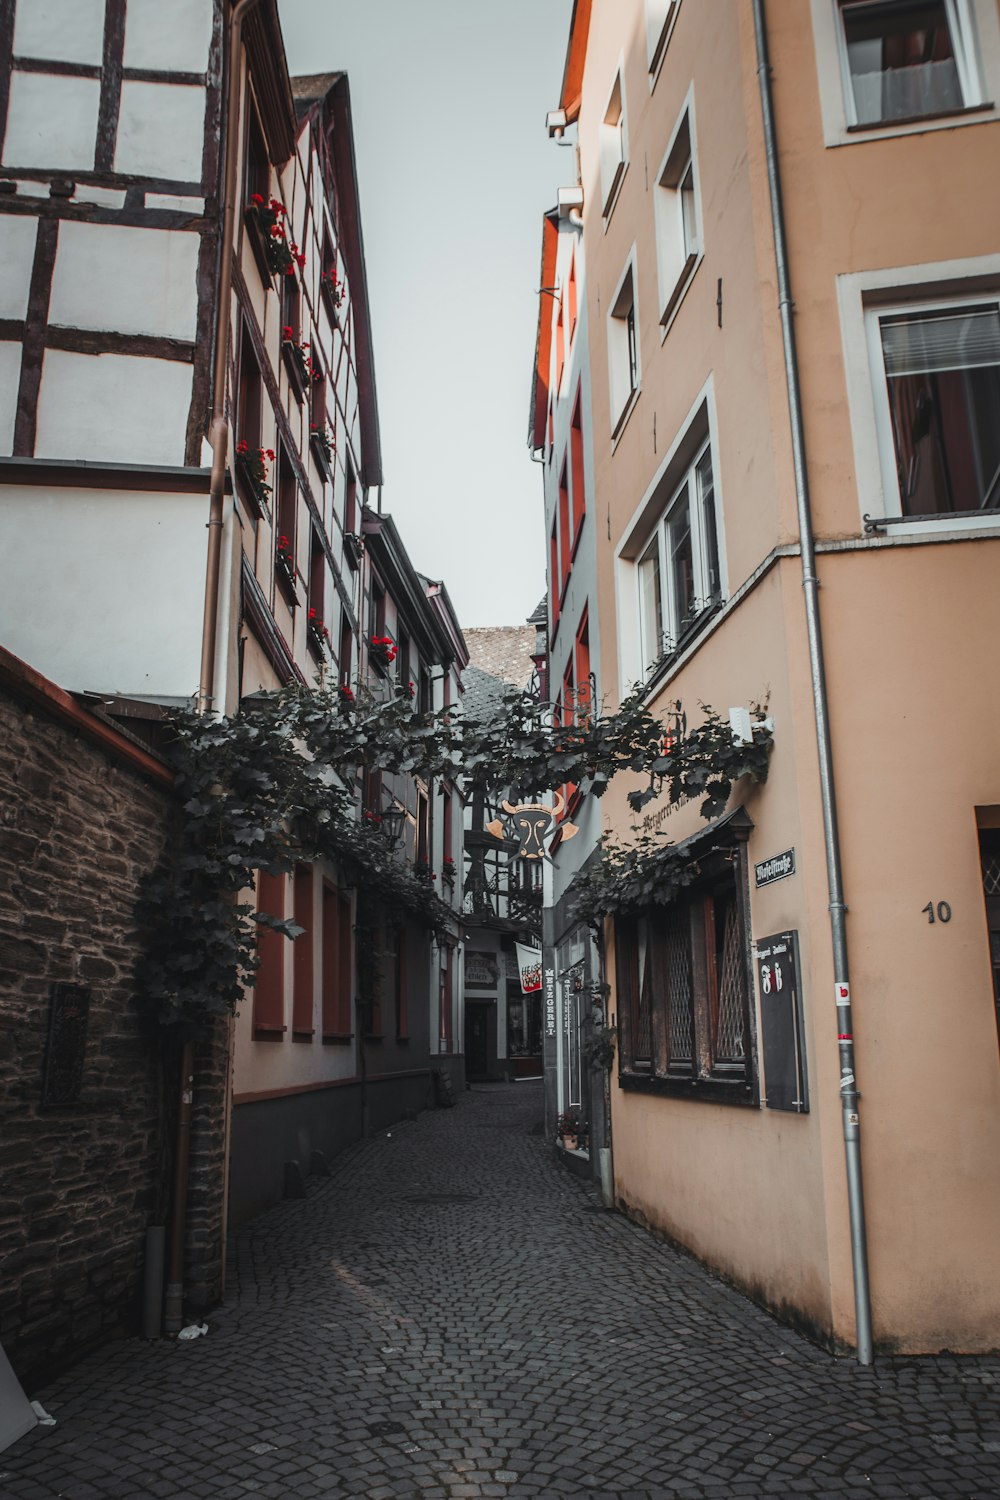 a narrow cobblestone street in a european city